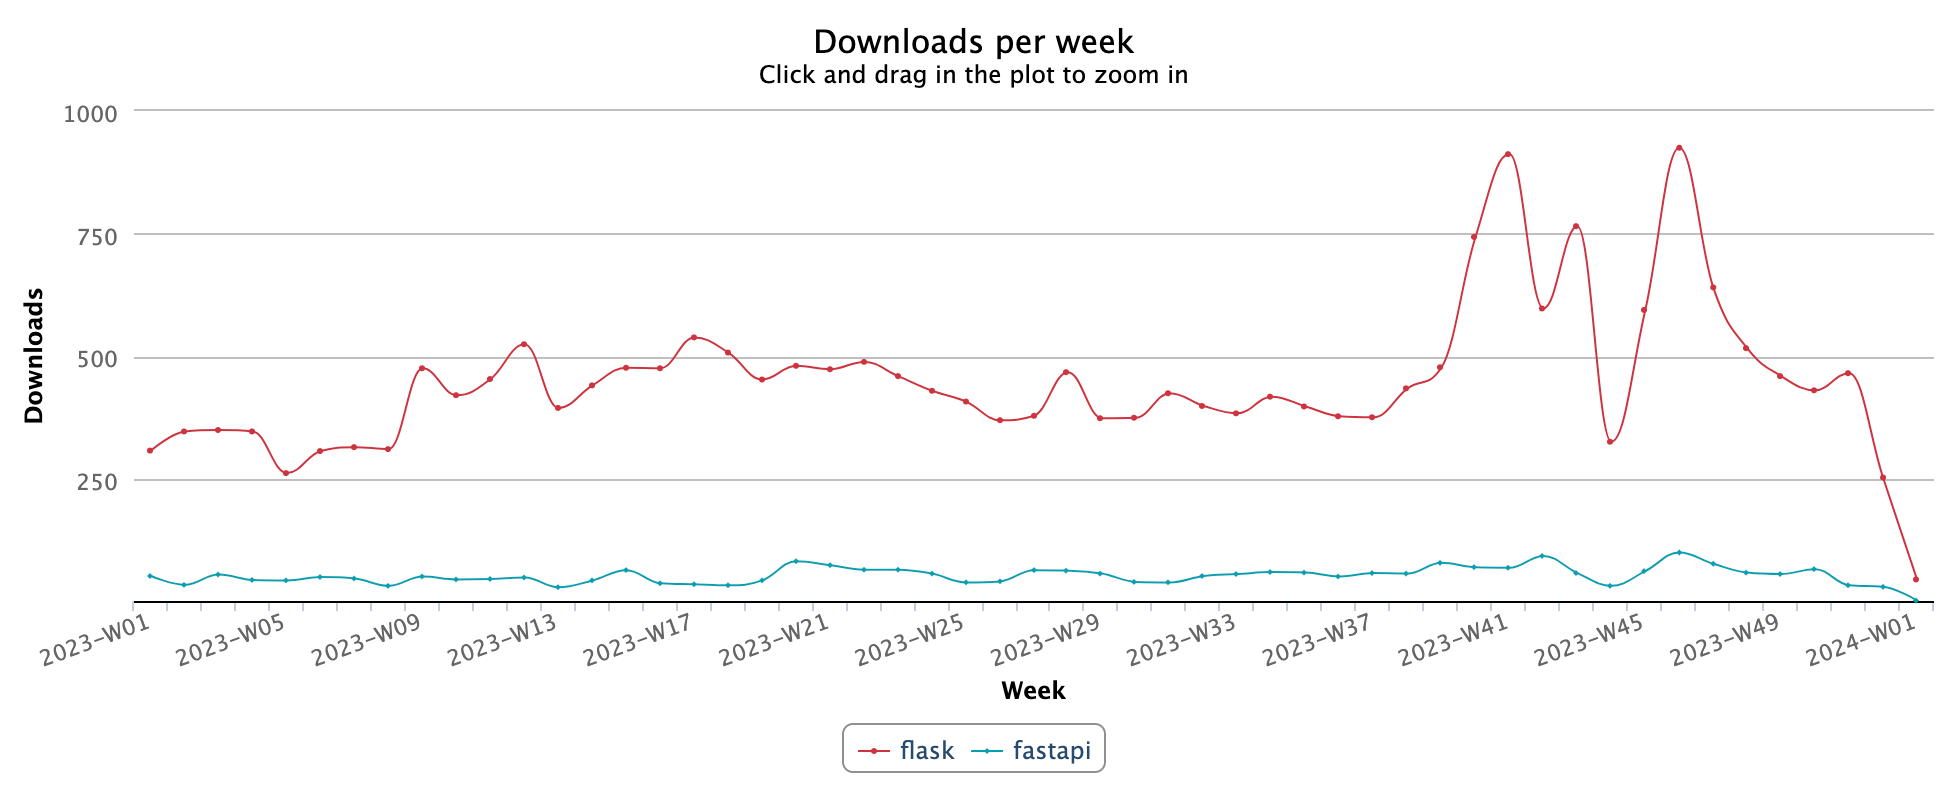 FastAPI vs Flask downloads per week.